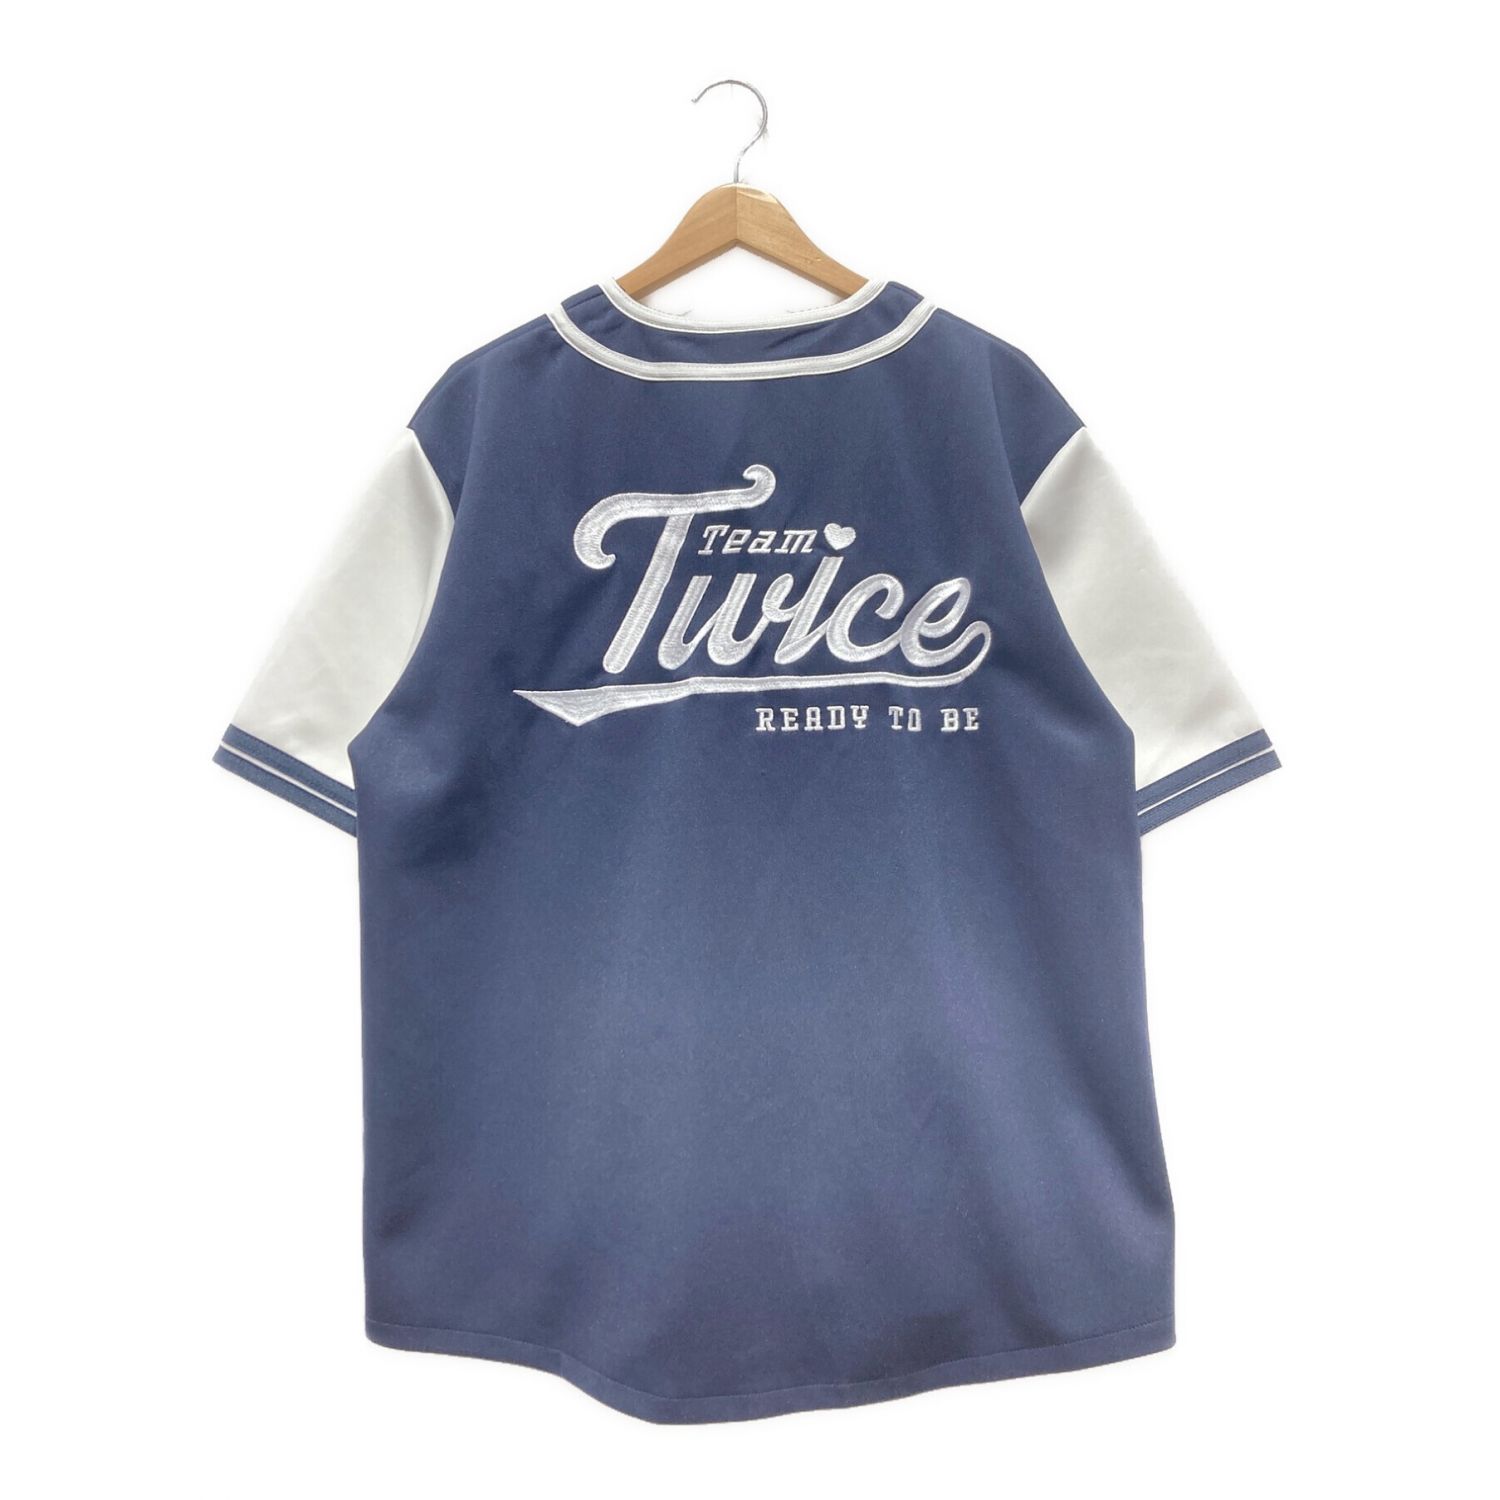 TWICE (トゥワイス) ユニフォームシャツ メンズ ネイビー TWICE 5TH 